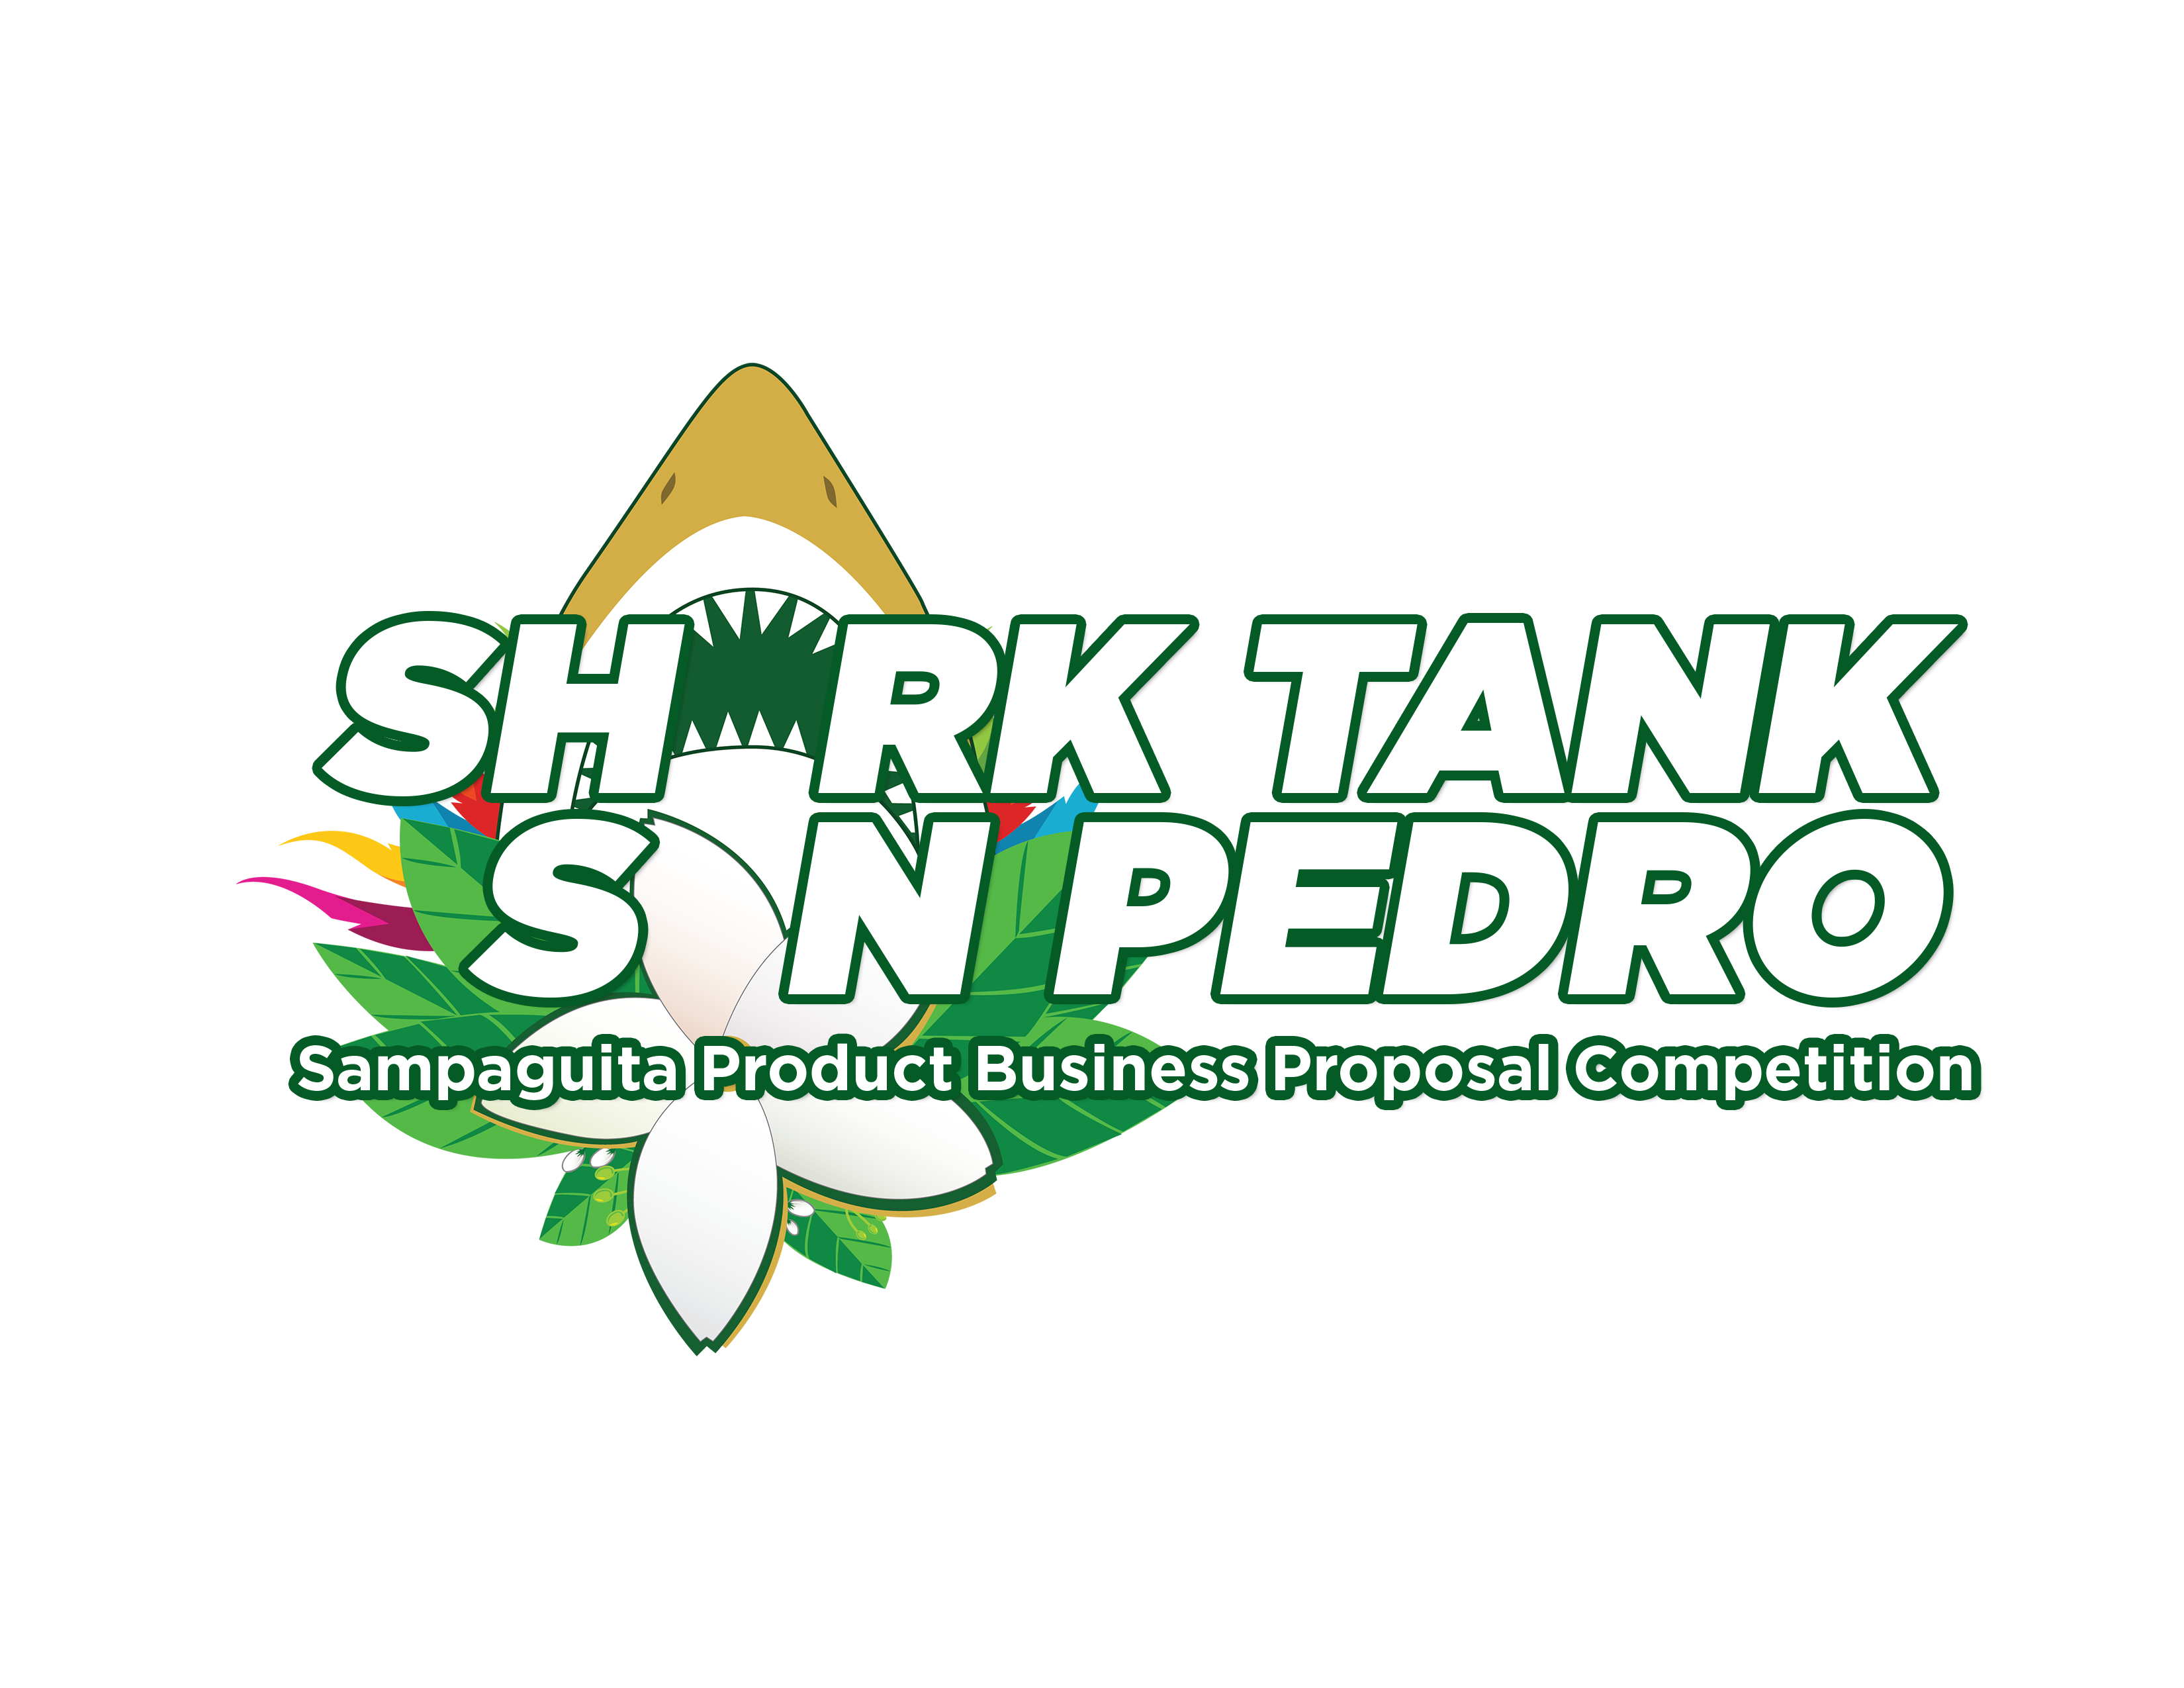 Shark Tank San Pedro Episode 9